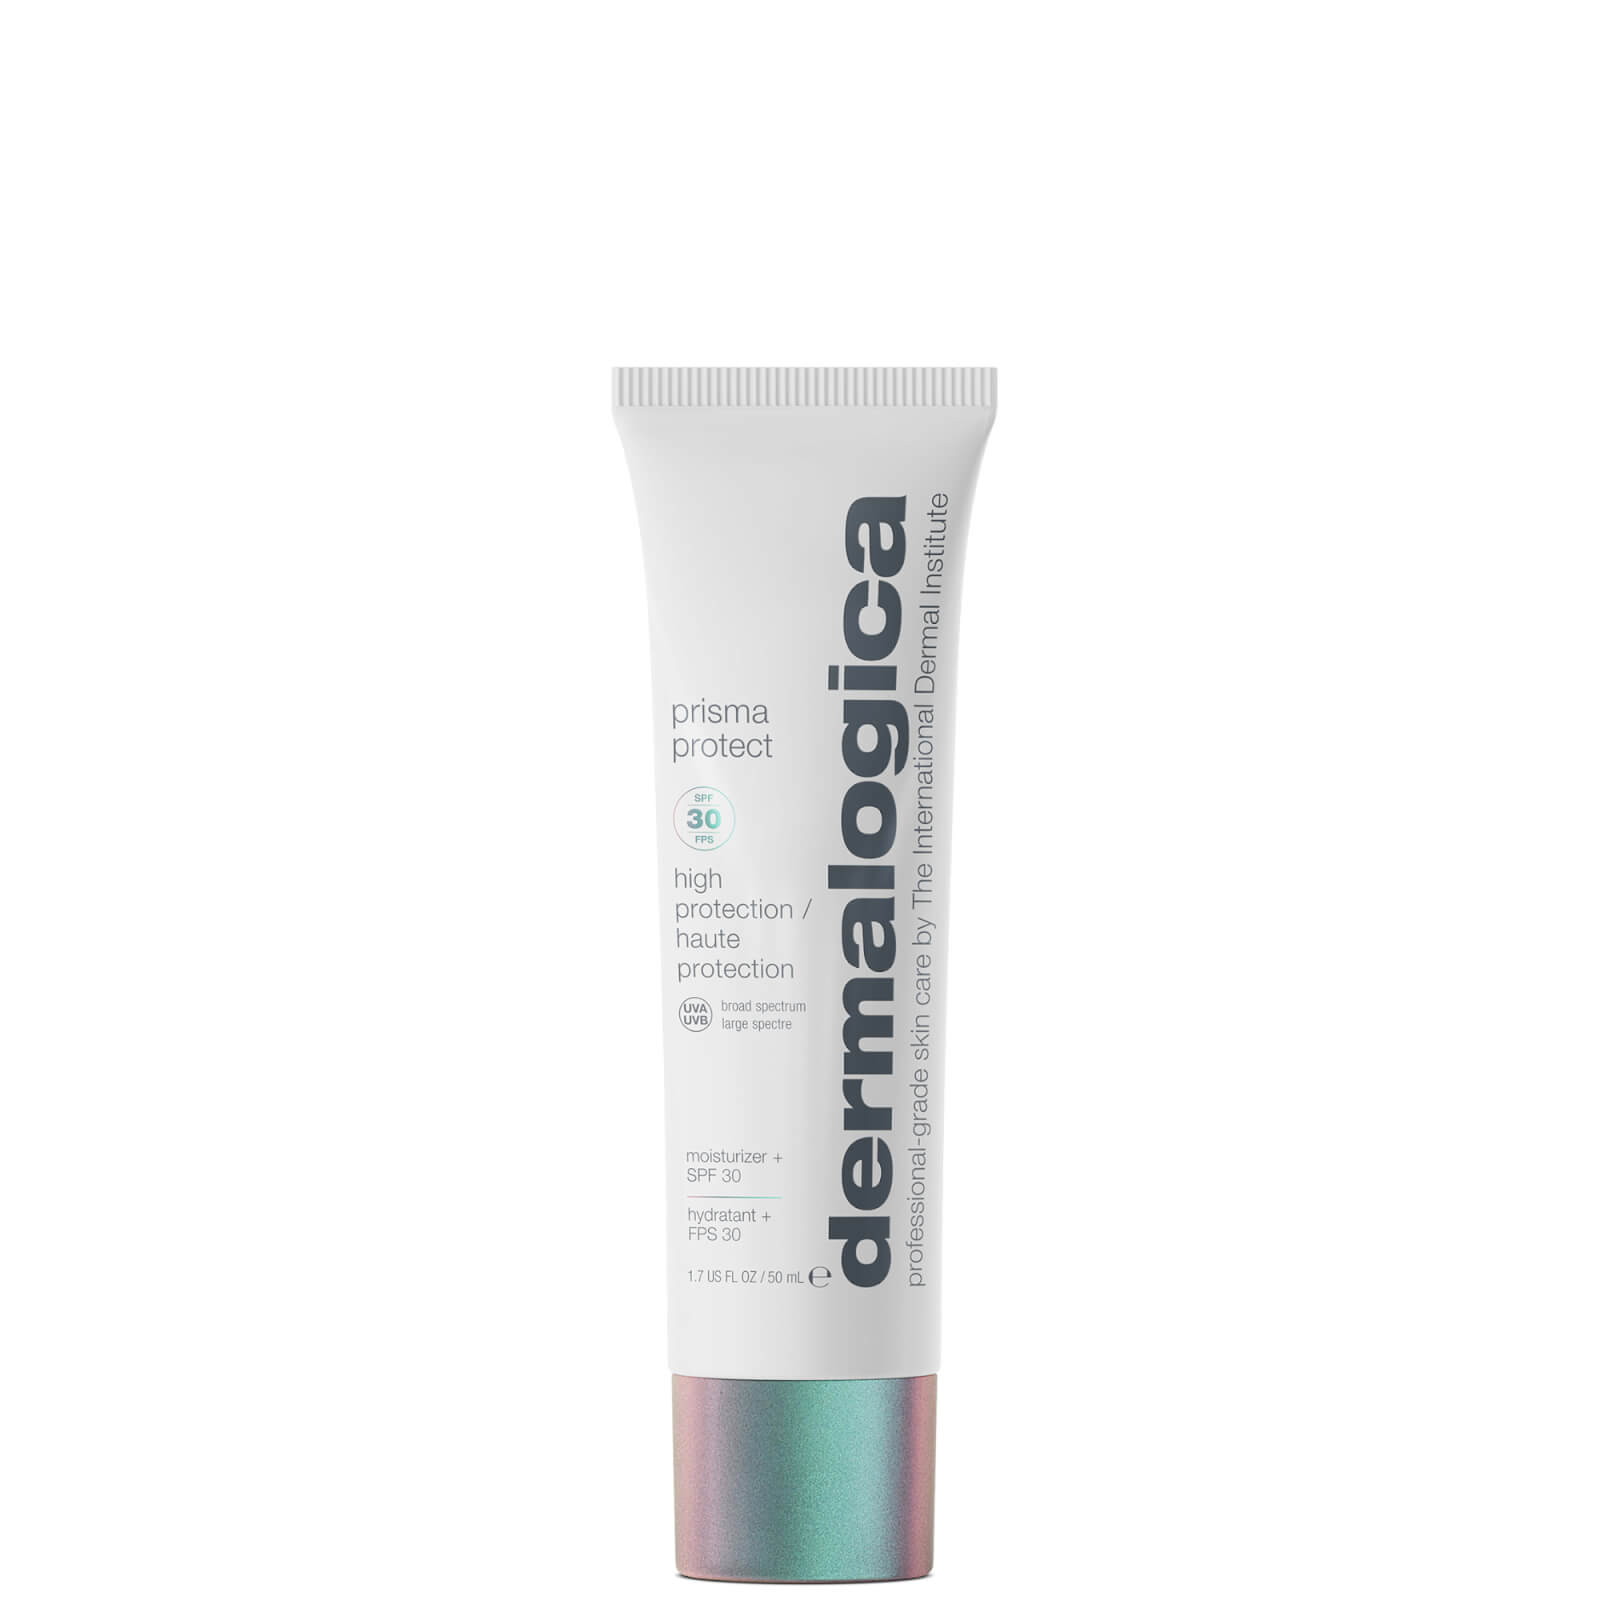 Photos - Cream / Lotion Dermalogica Prisma Protect SPF 30 50ml 